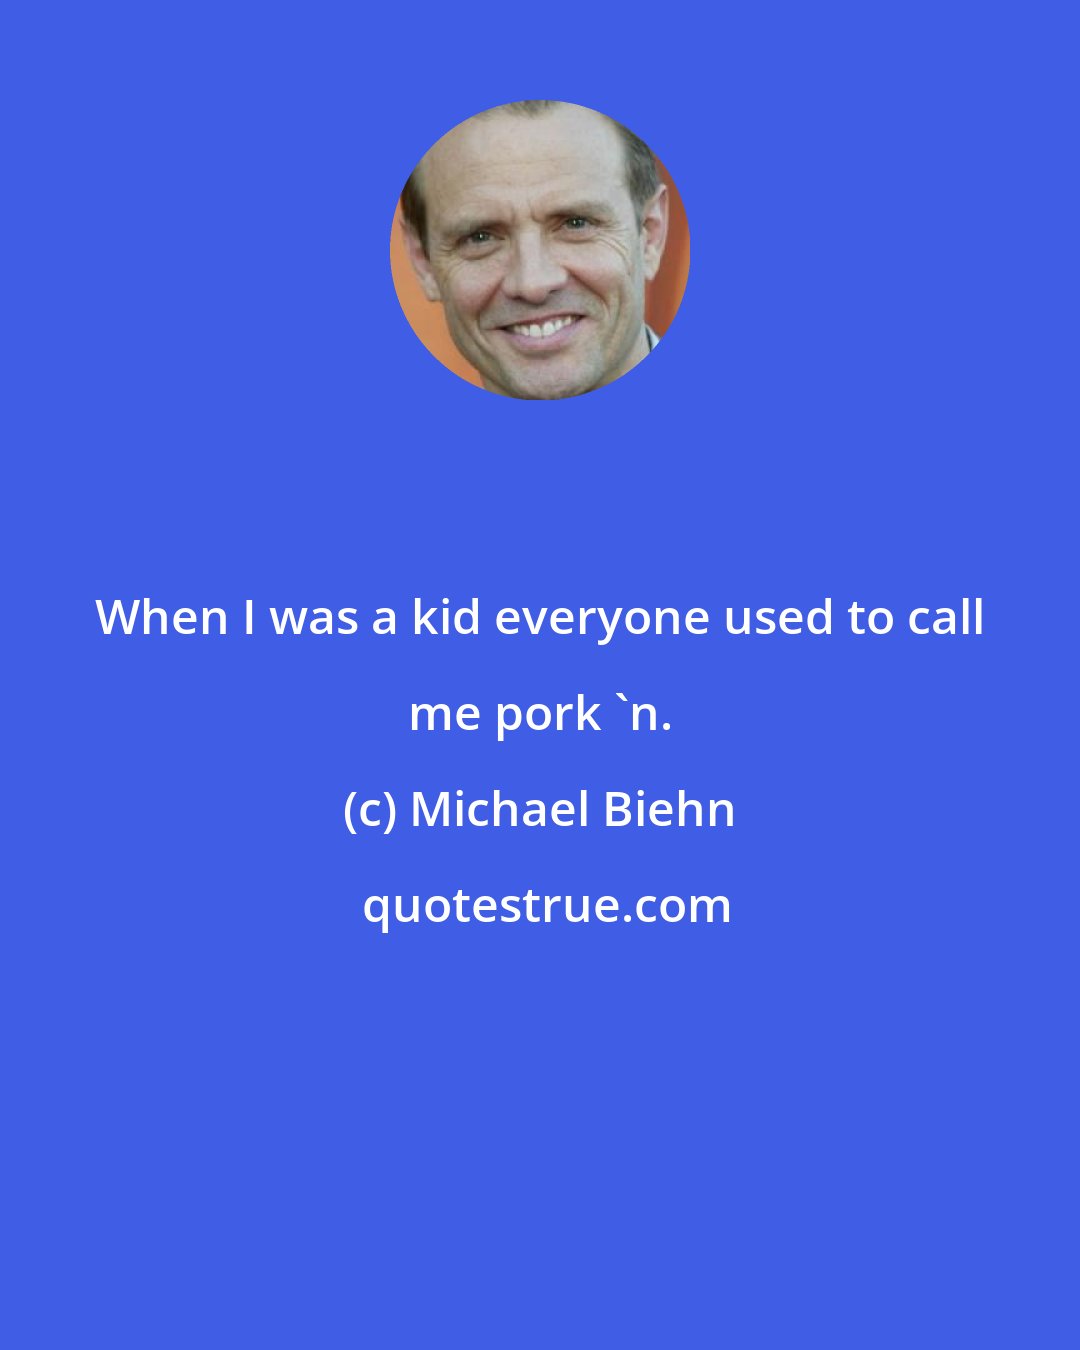 Michael Biehn: When I was a kid everyone used to call me pork 'n.